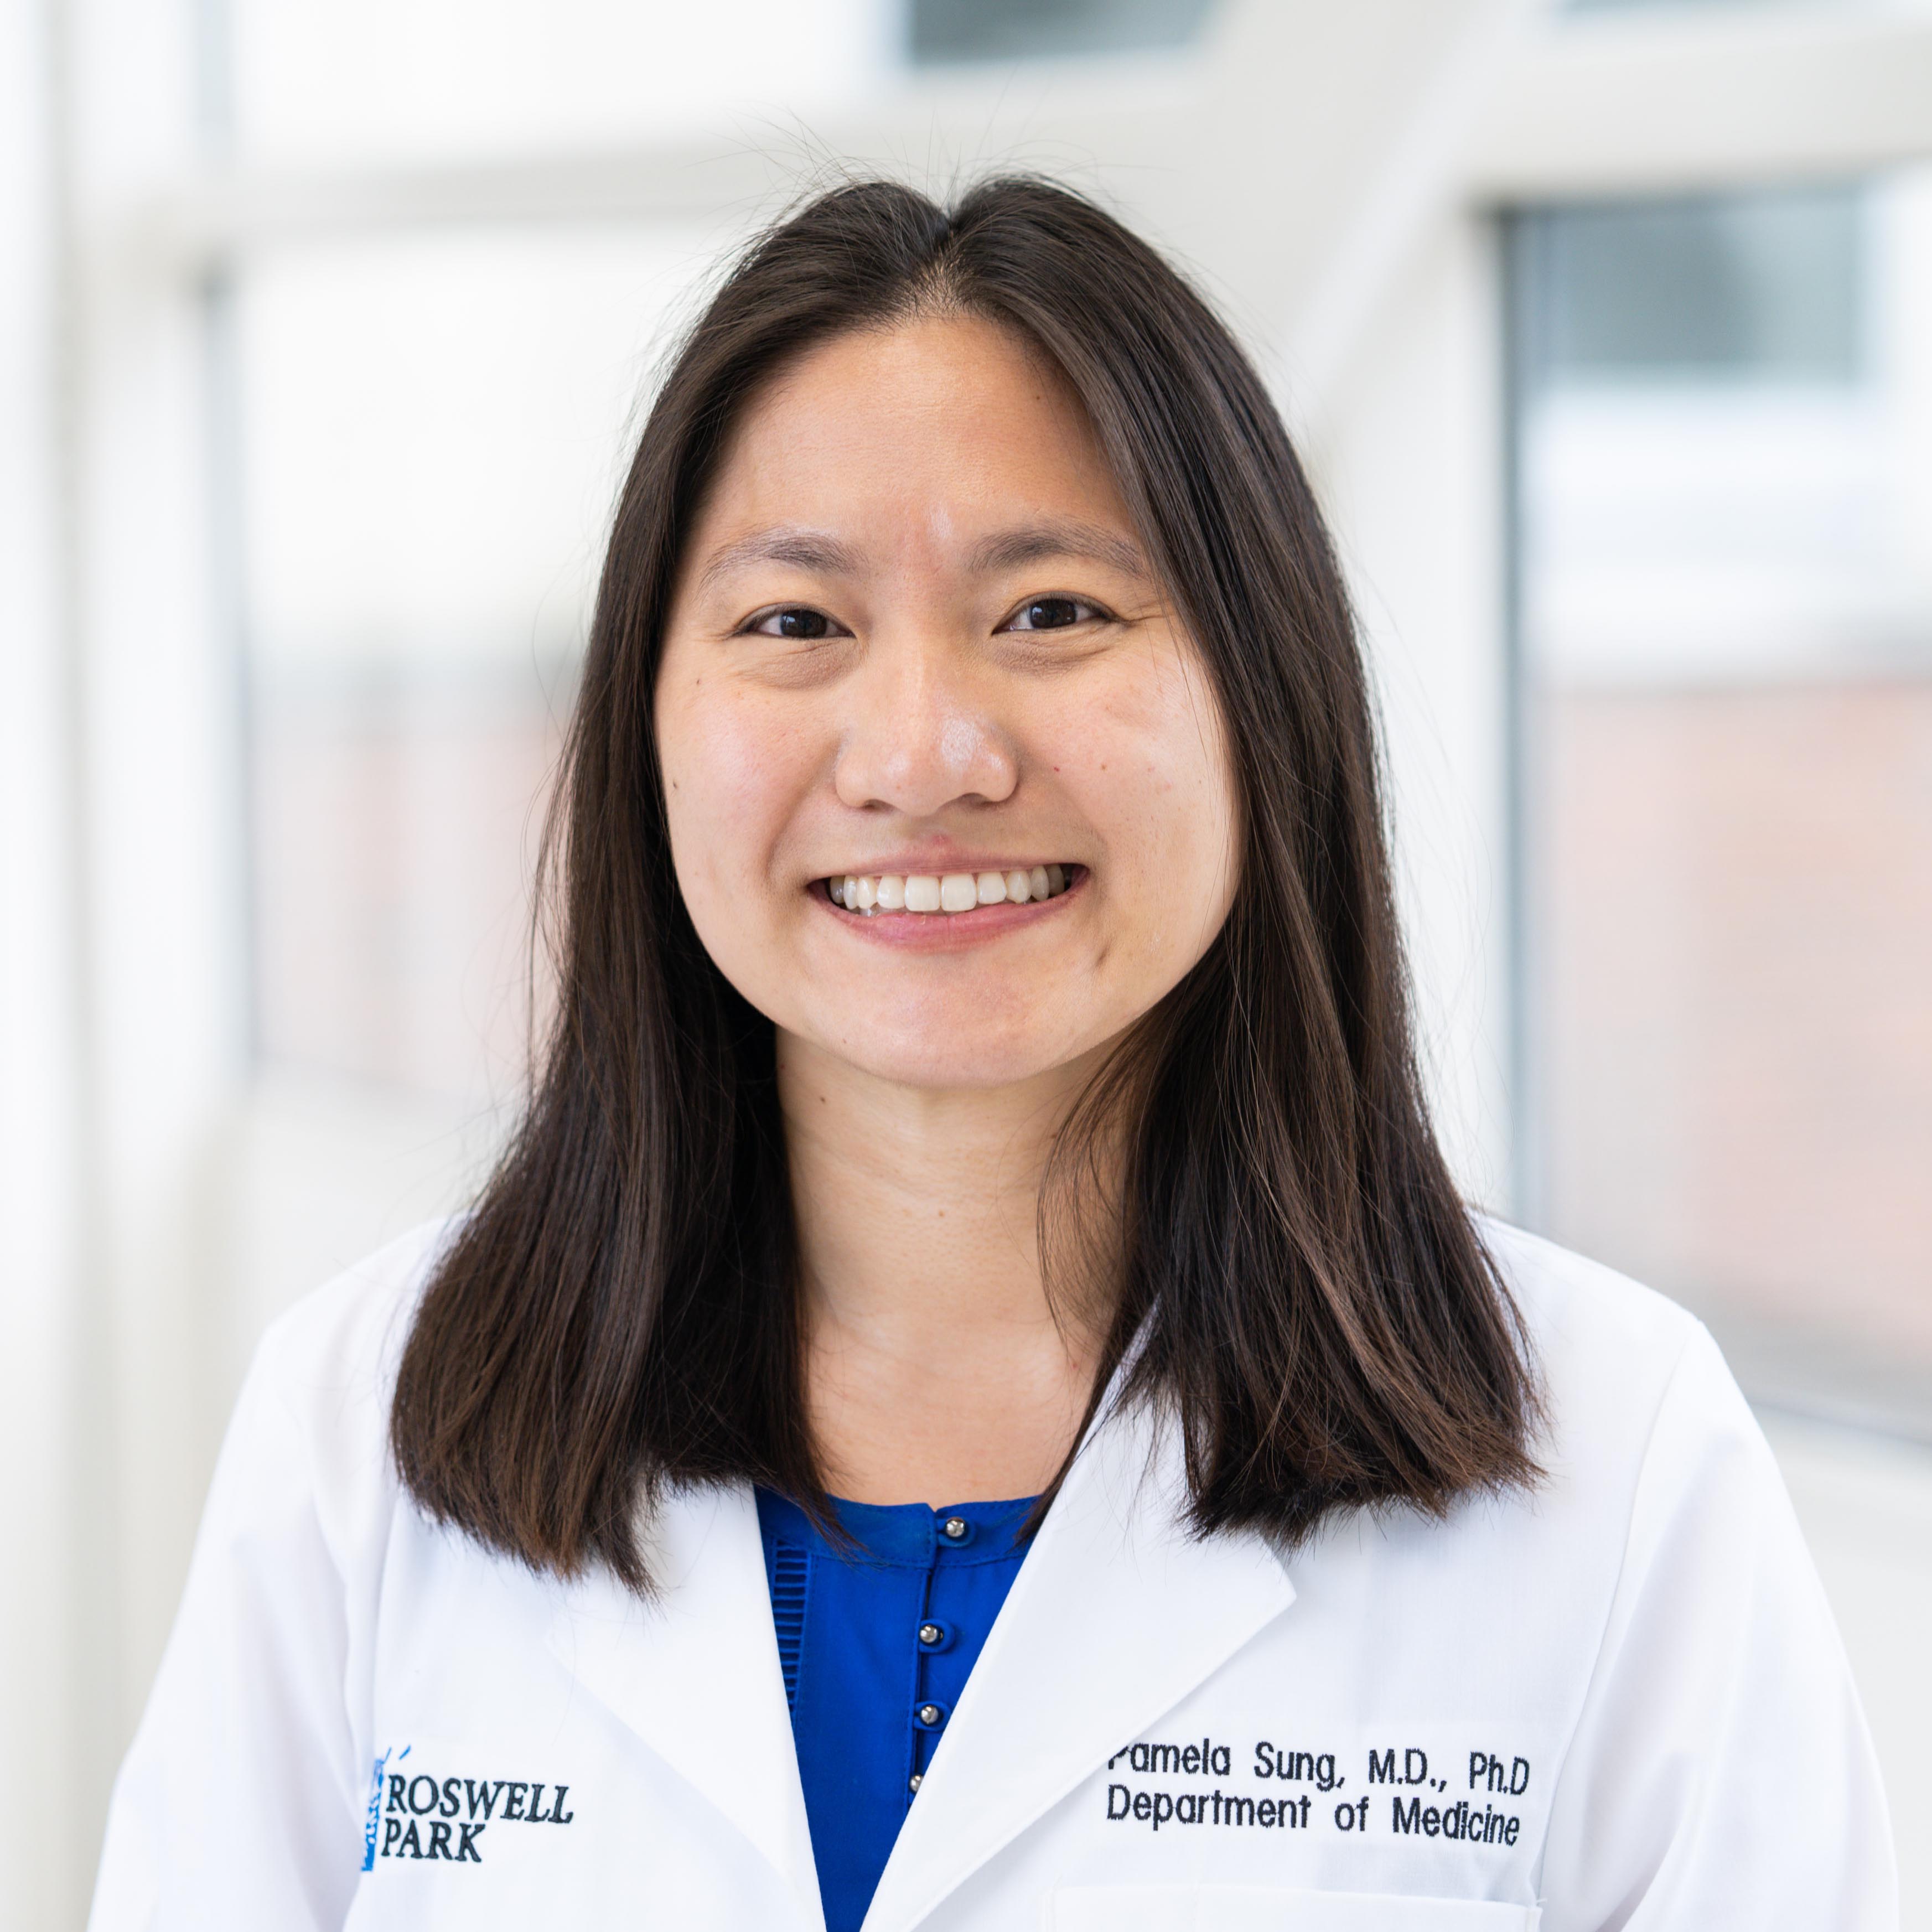 Pamela Sung, MD, PhD